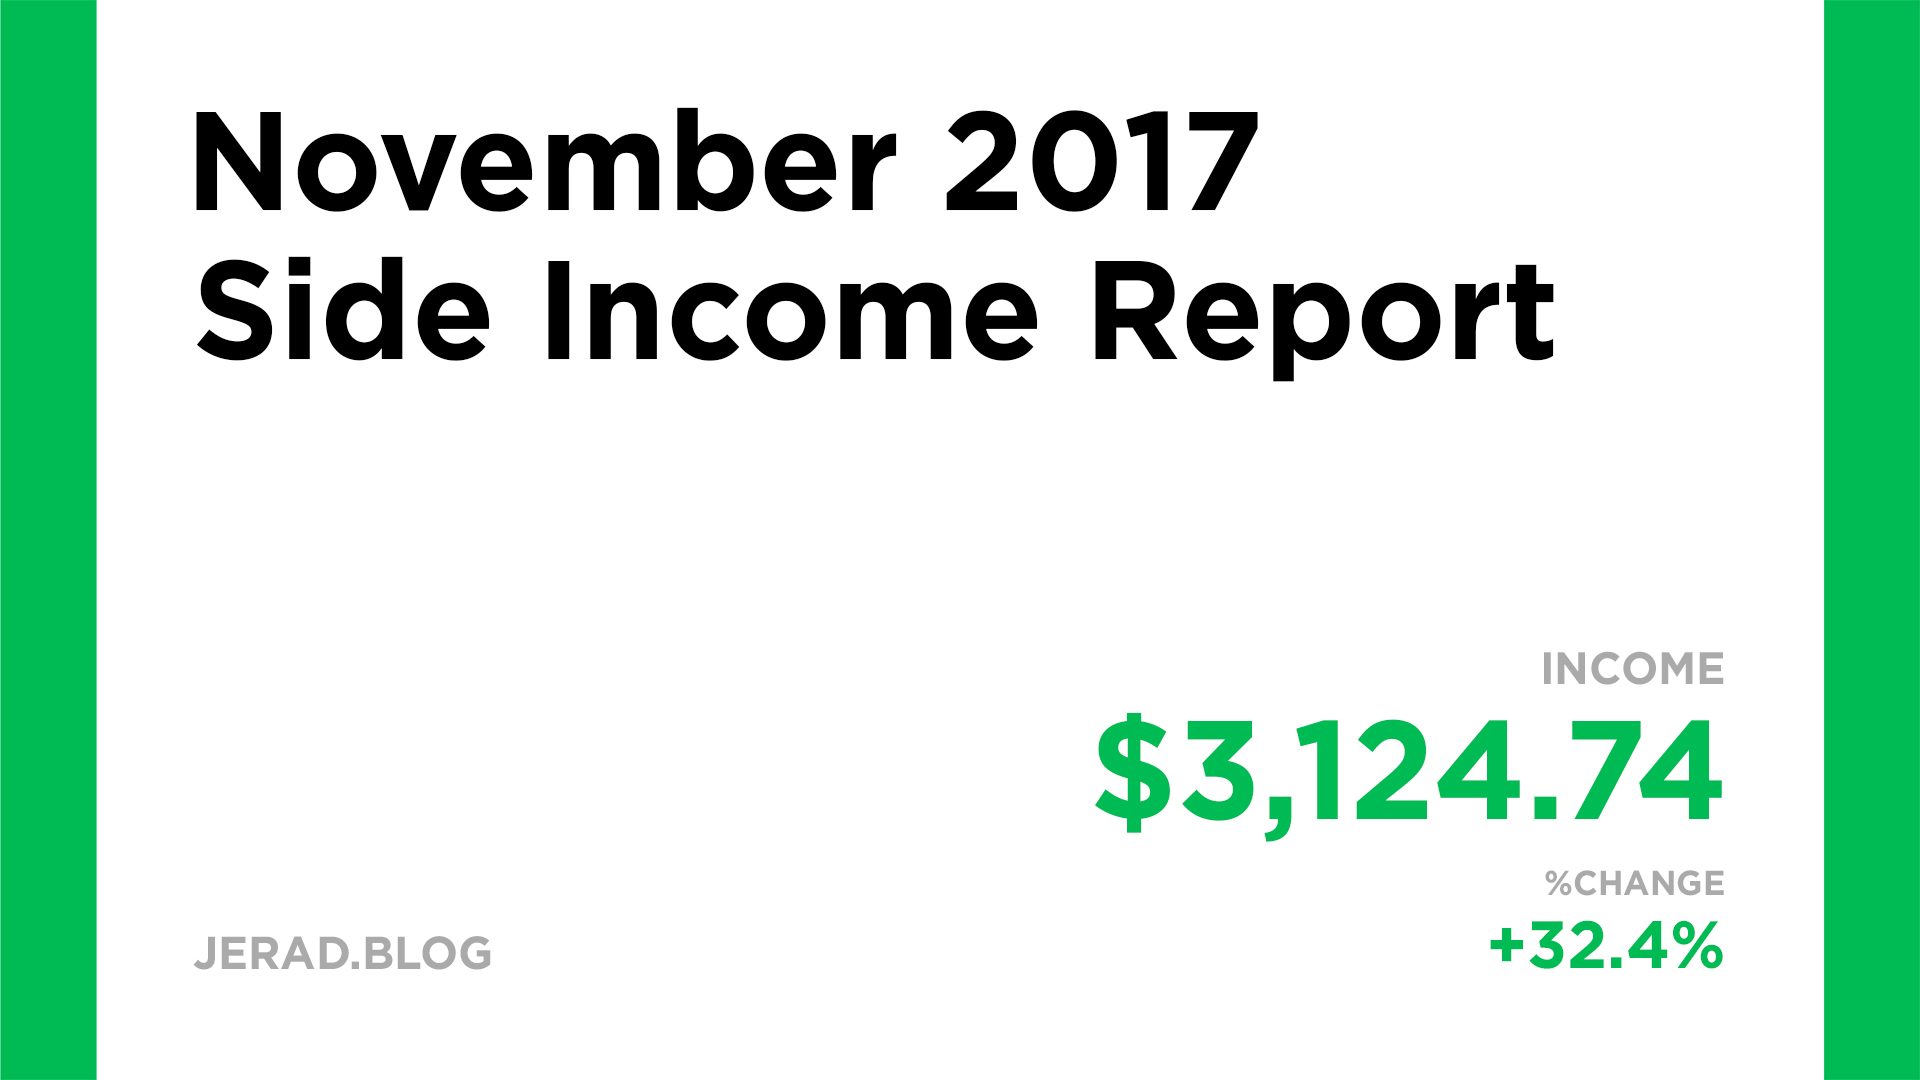 November 2017 Side Income Report